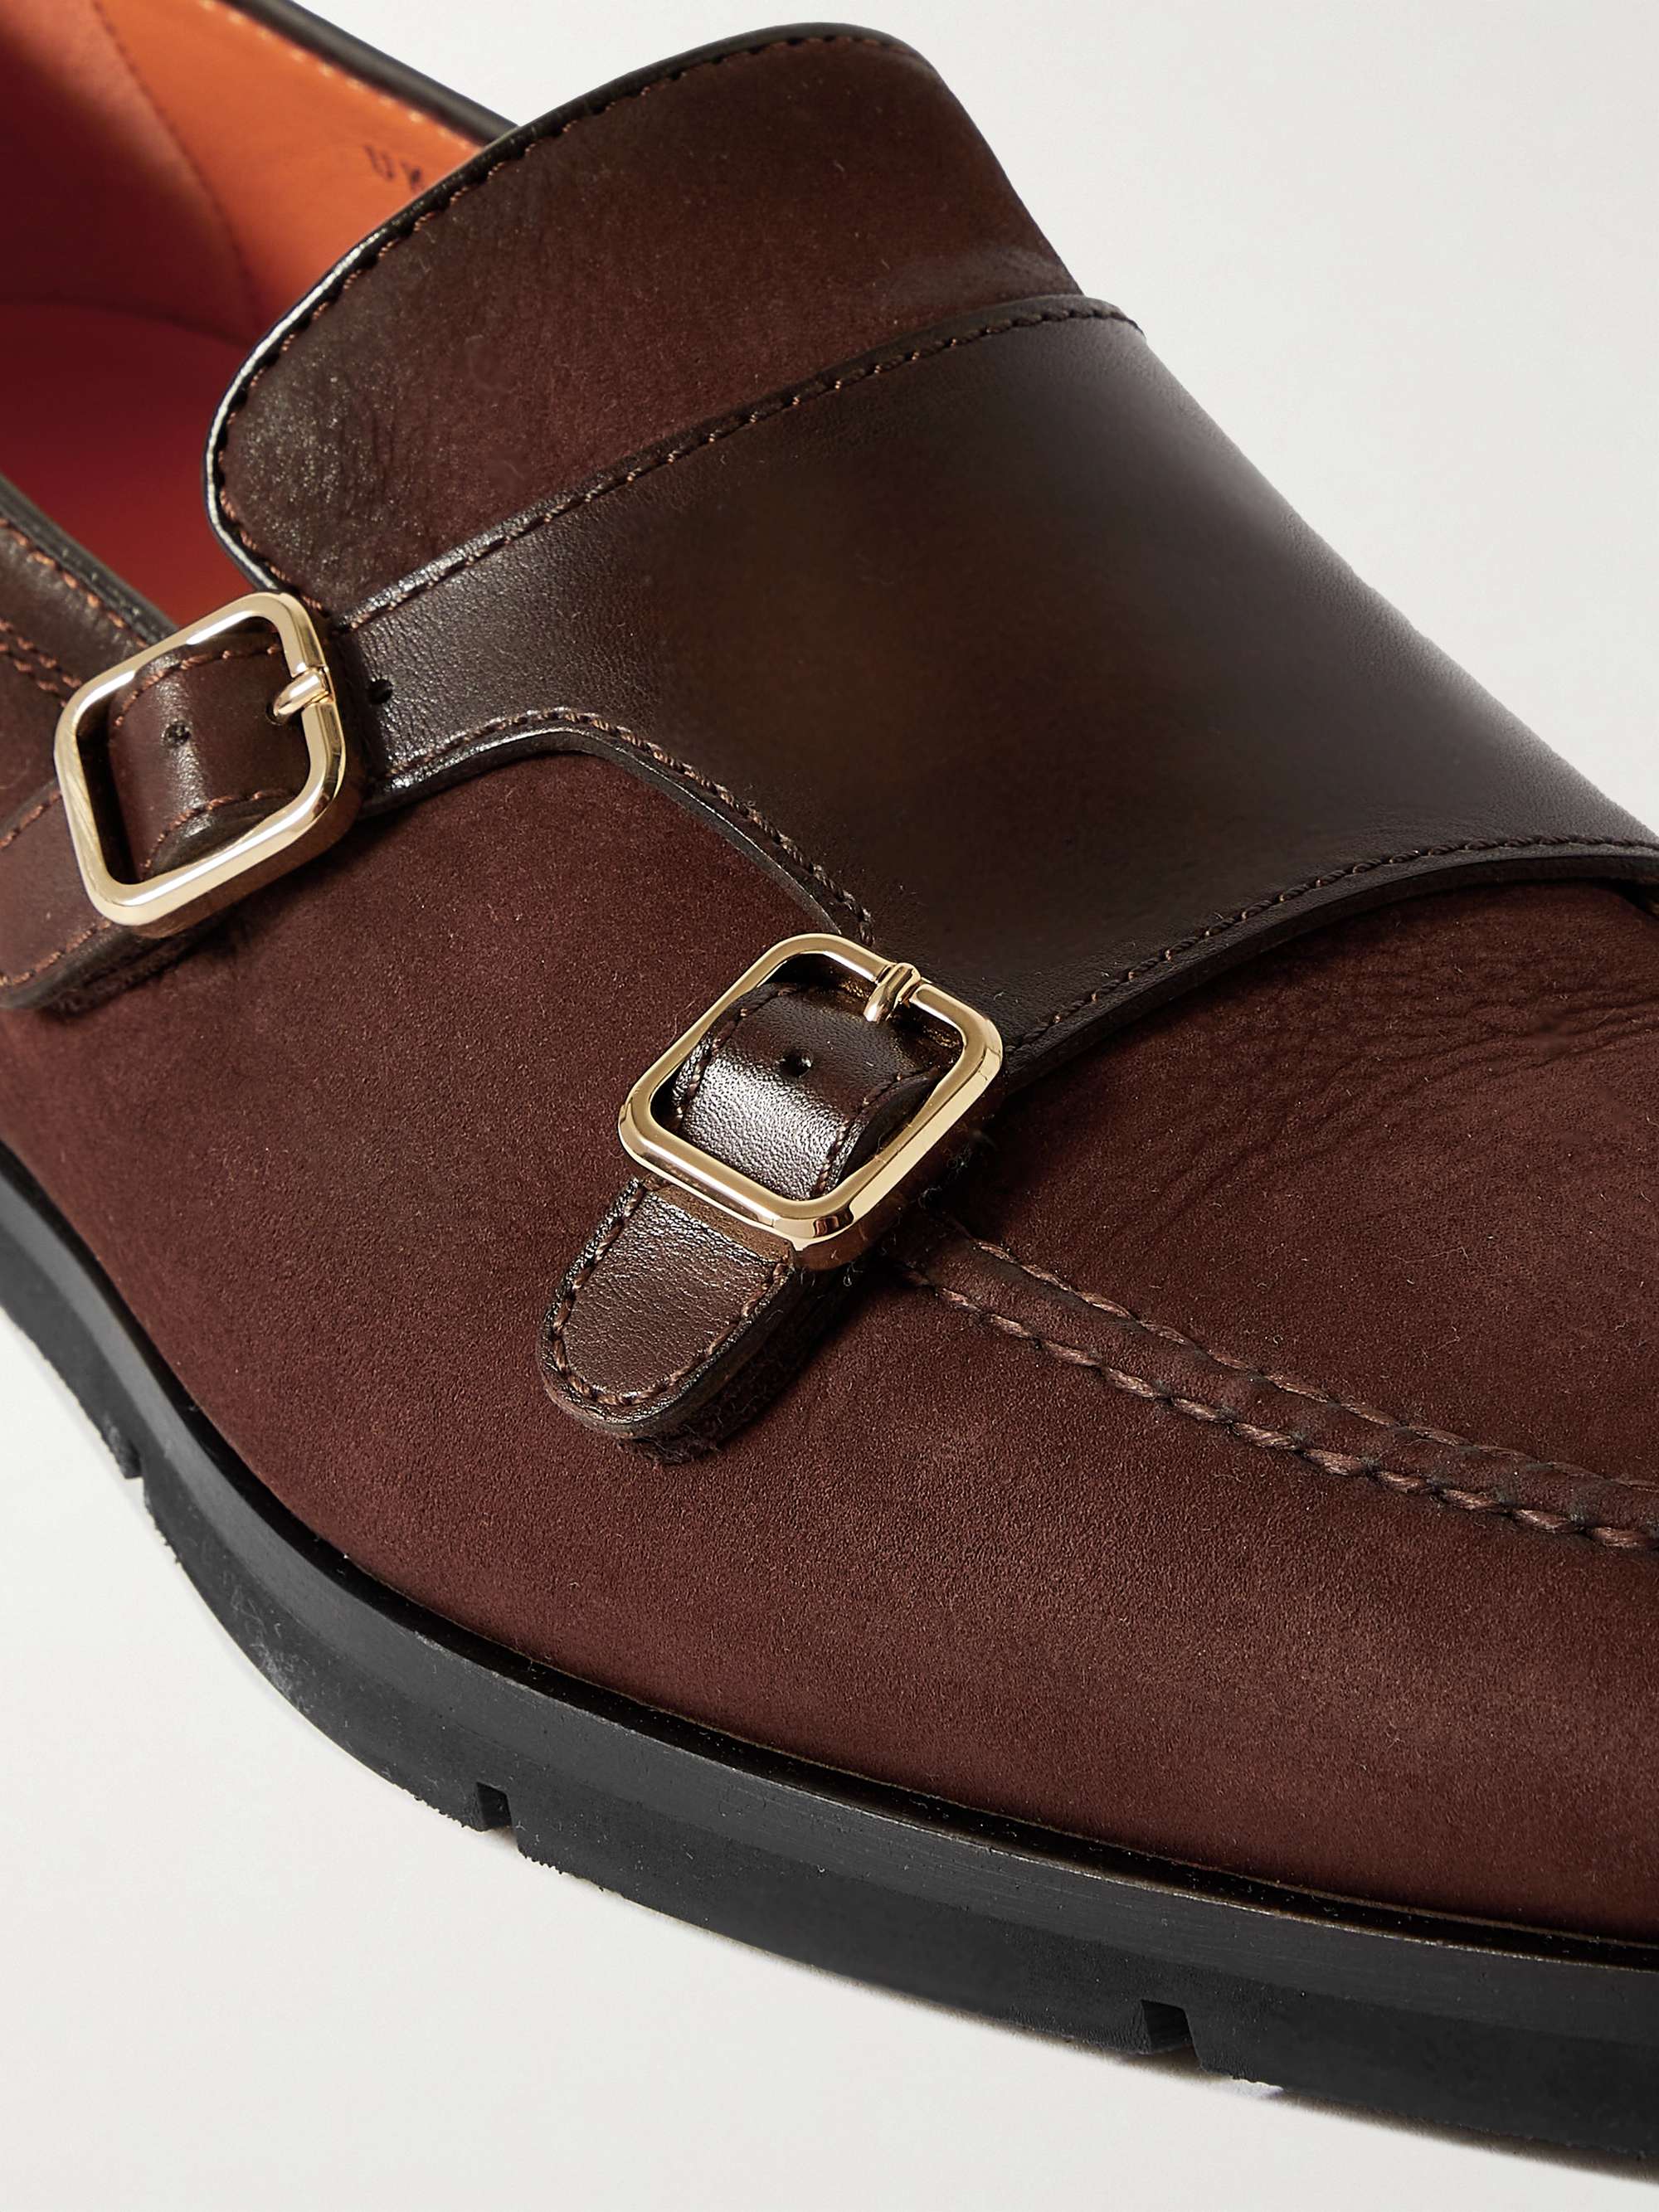 SANTONI Leather-Trimmed Suede Monk-Strap Shoes